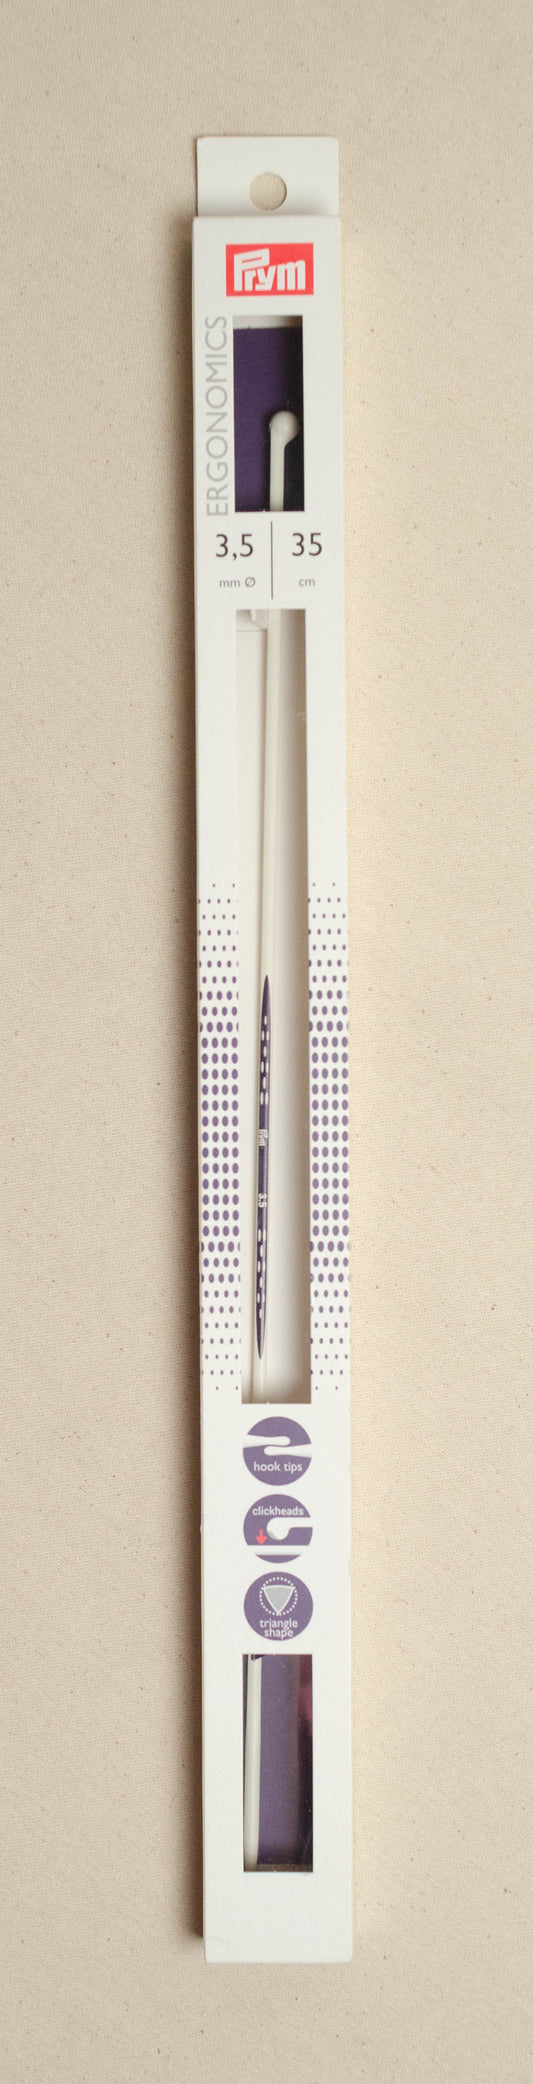 Prym Ergonomics 35cm Knitting Needles - 35cm X 3.5mm